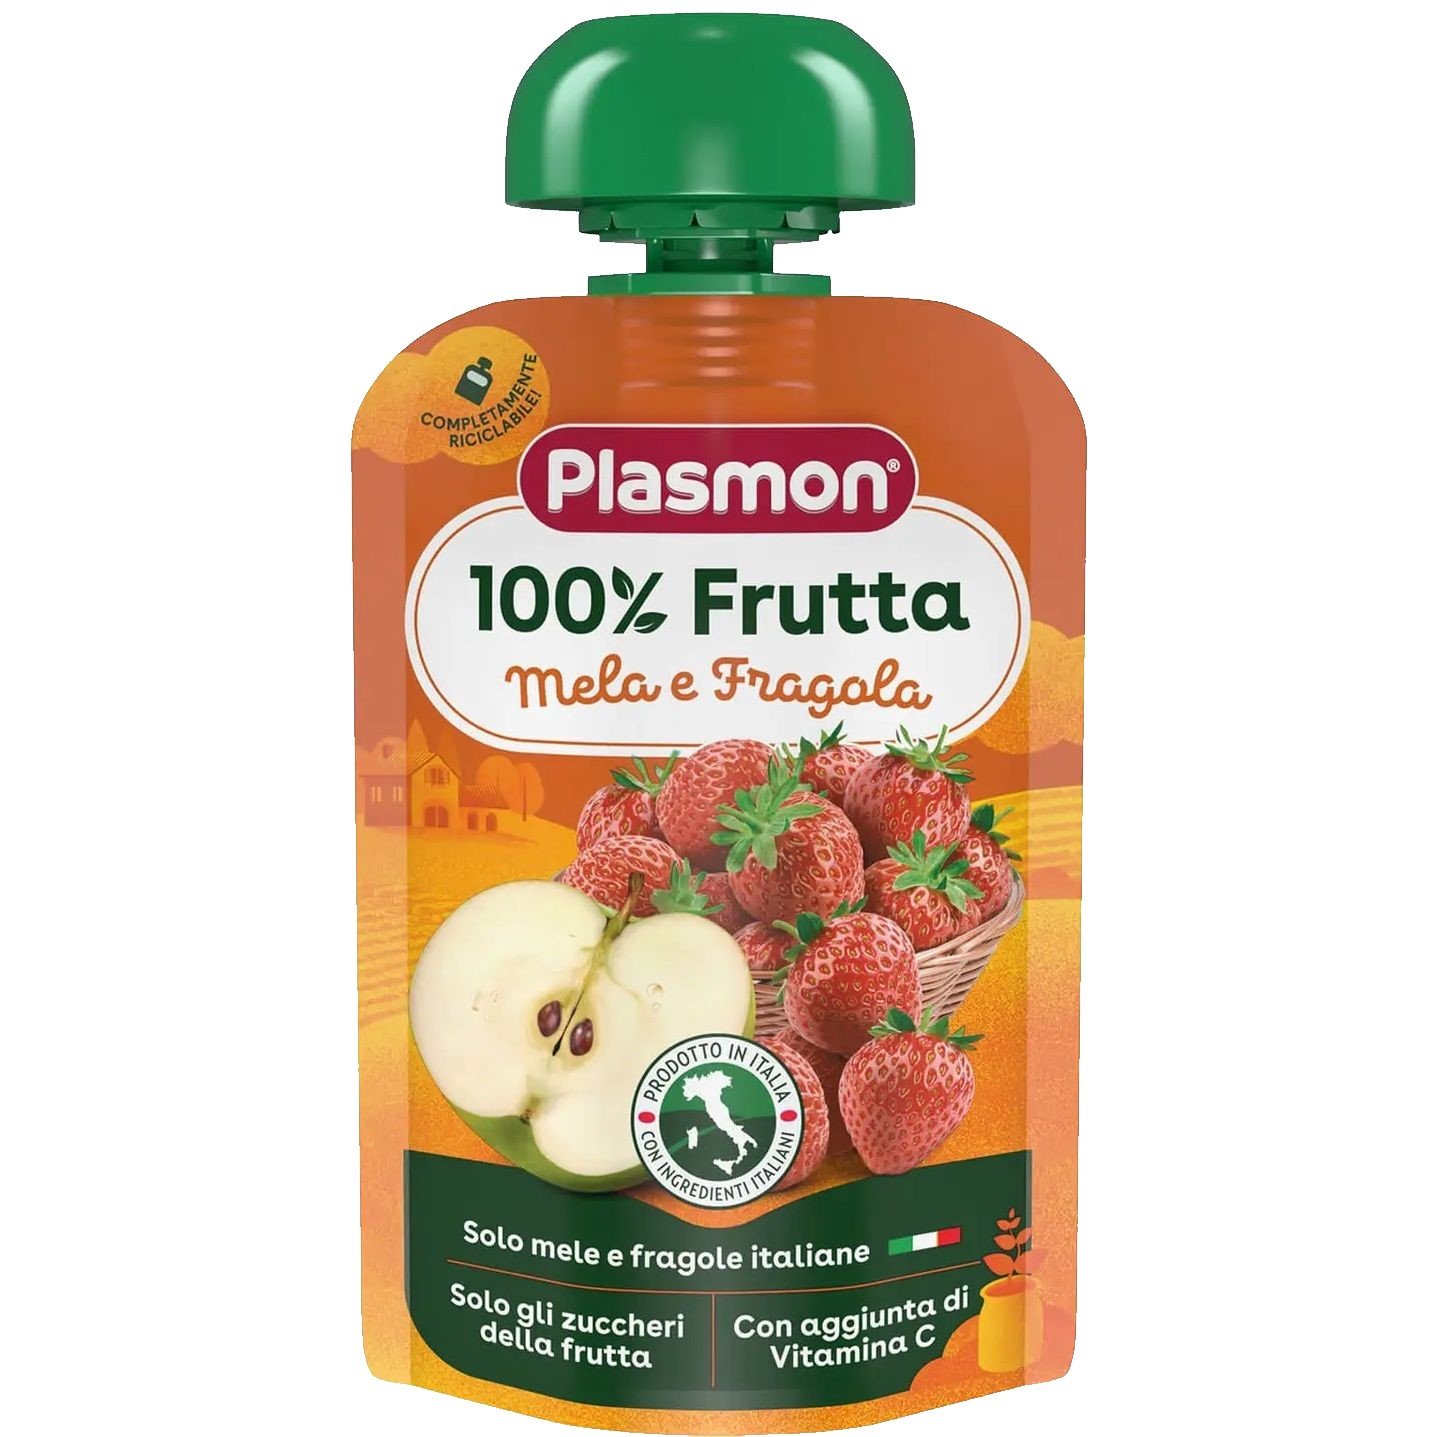 Фото - Детское питание Пюре Plasmon Merenda 100 Frutta Яблуко та полуниця з вітамінами, 100 г